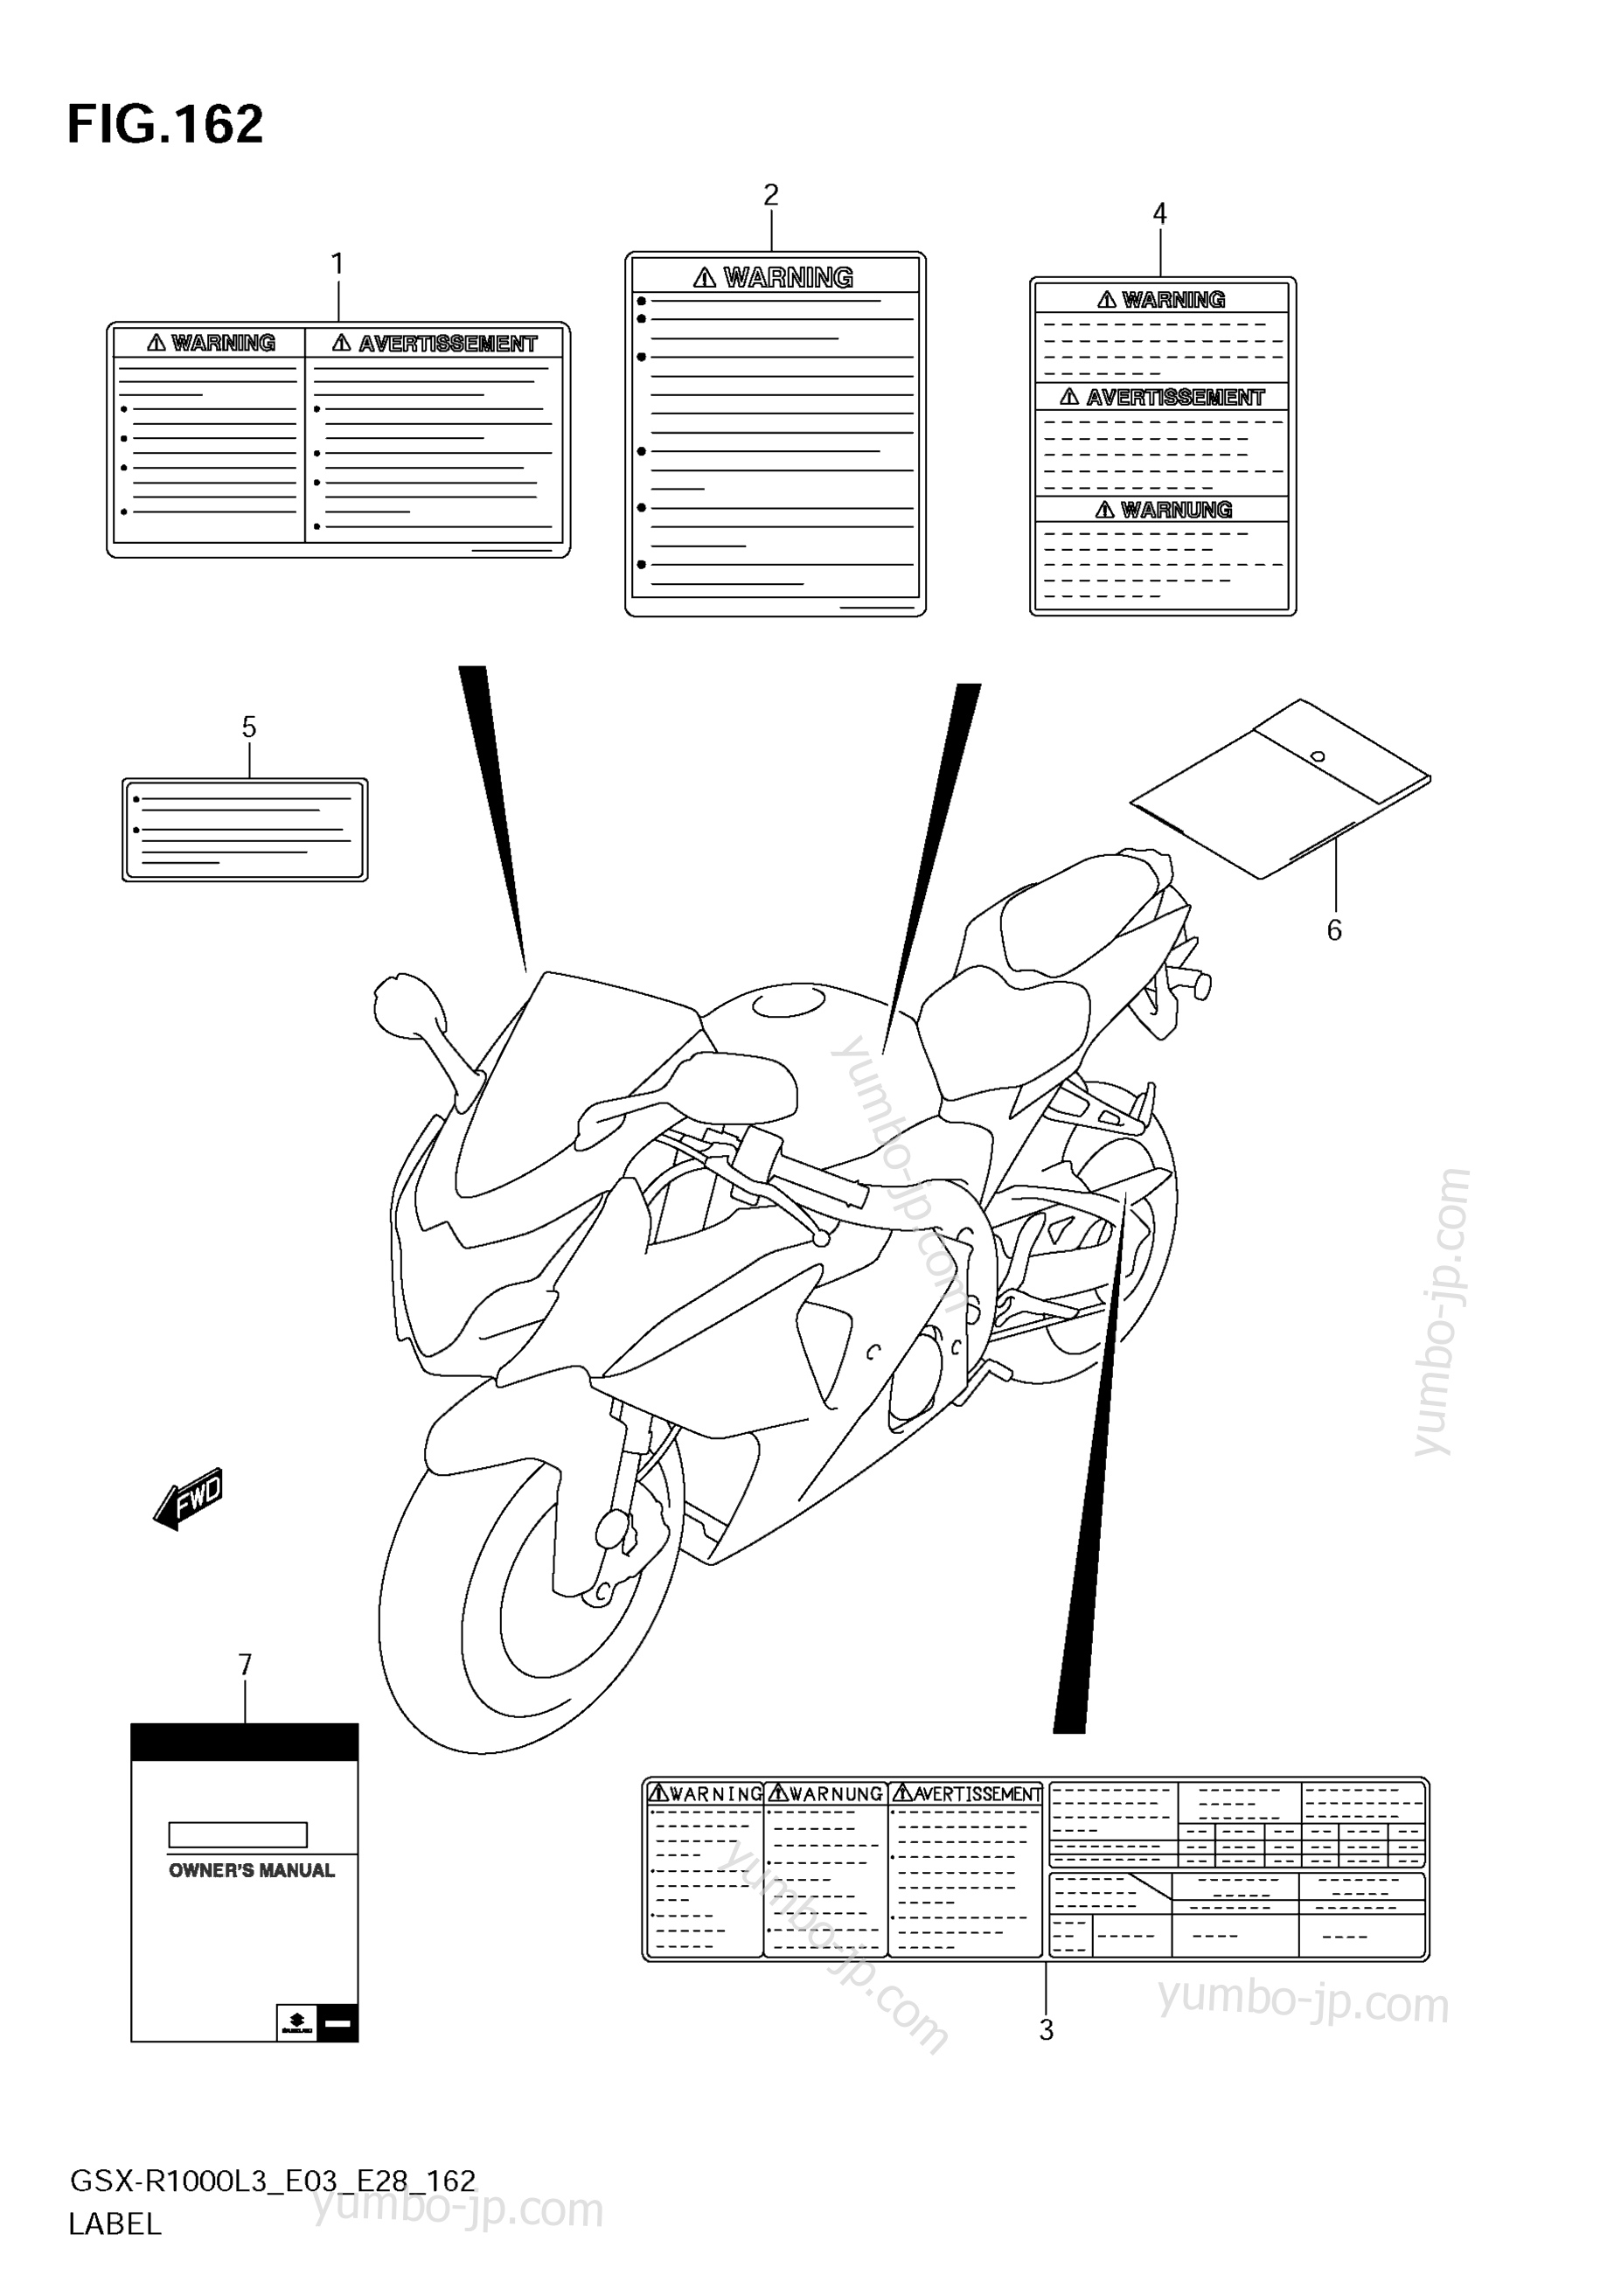 LABEL (GSX-R1000L3 E28) for motorcycles SUZUKI GSX-R1000 2013 year